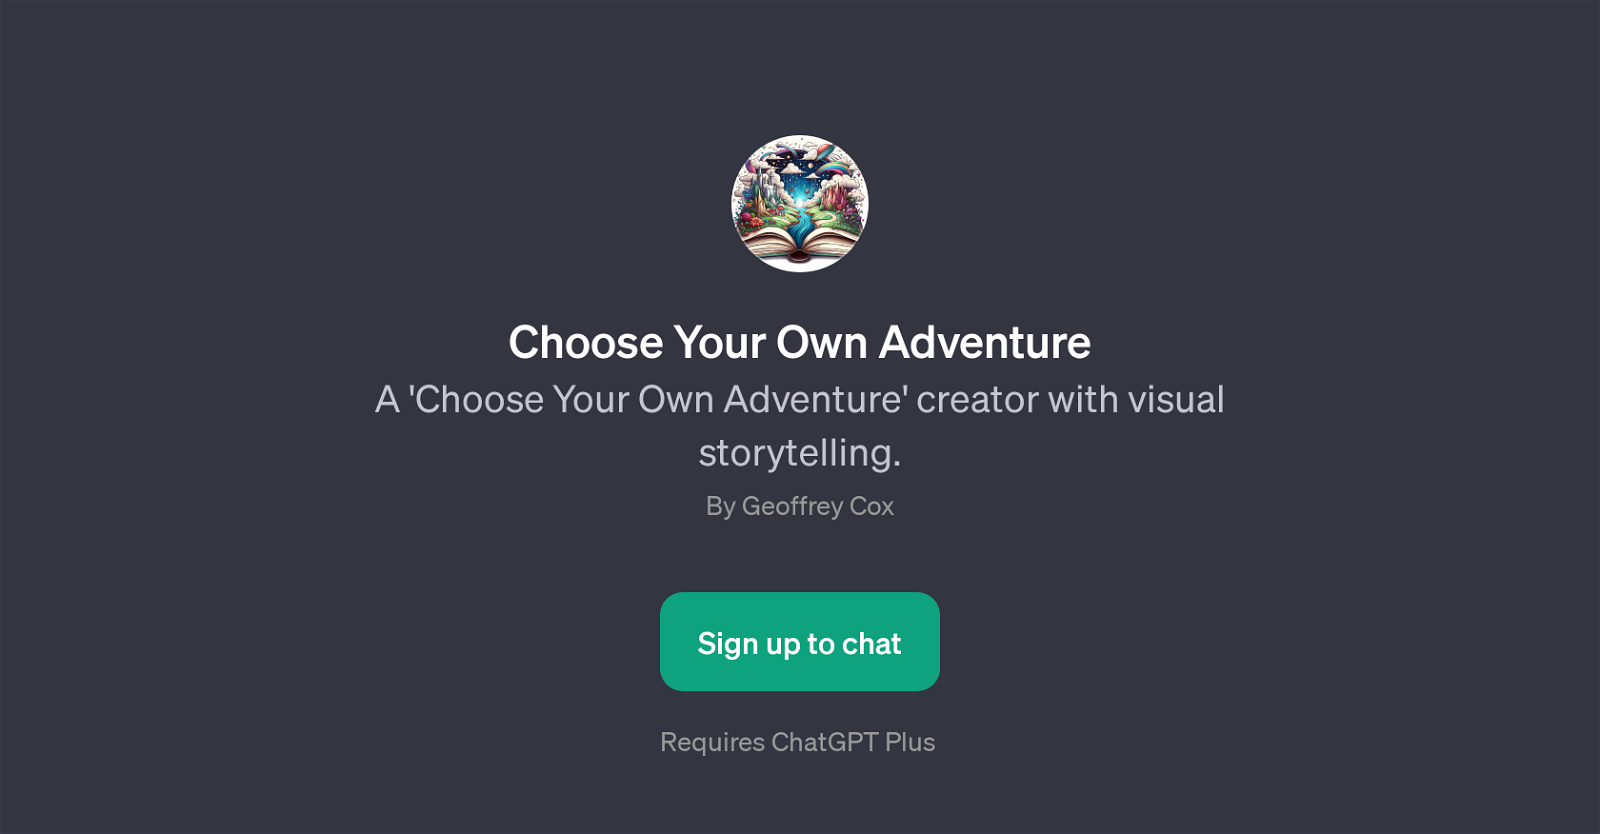 Choose Your Own Adventure website